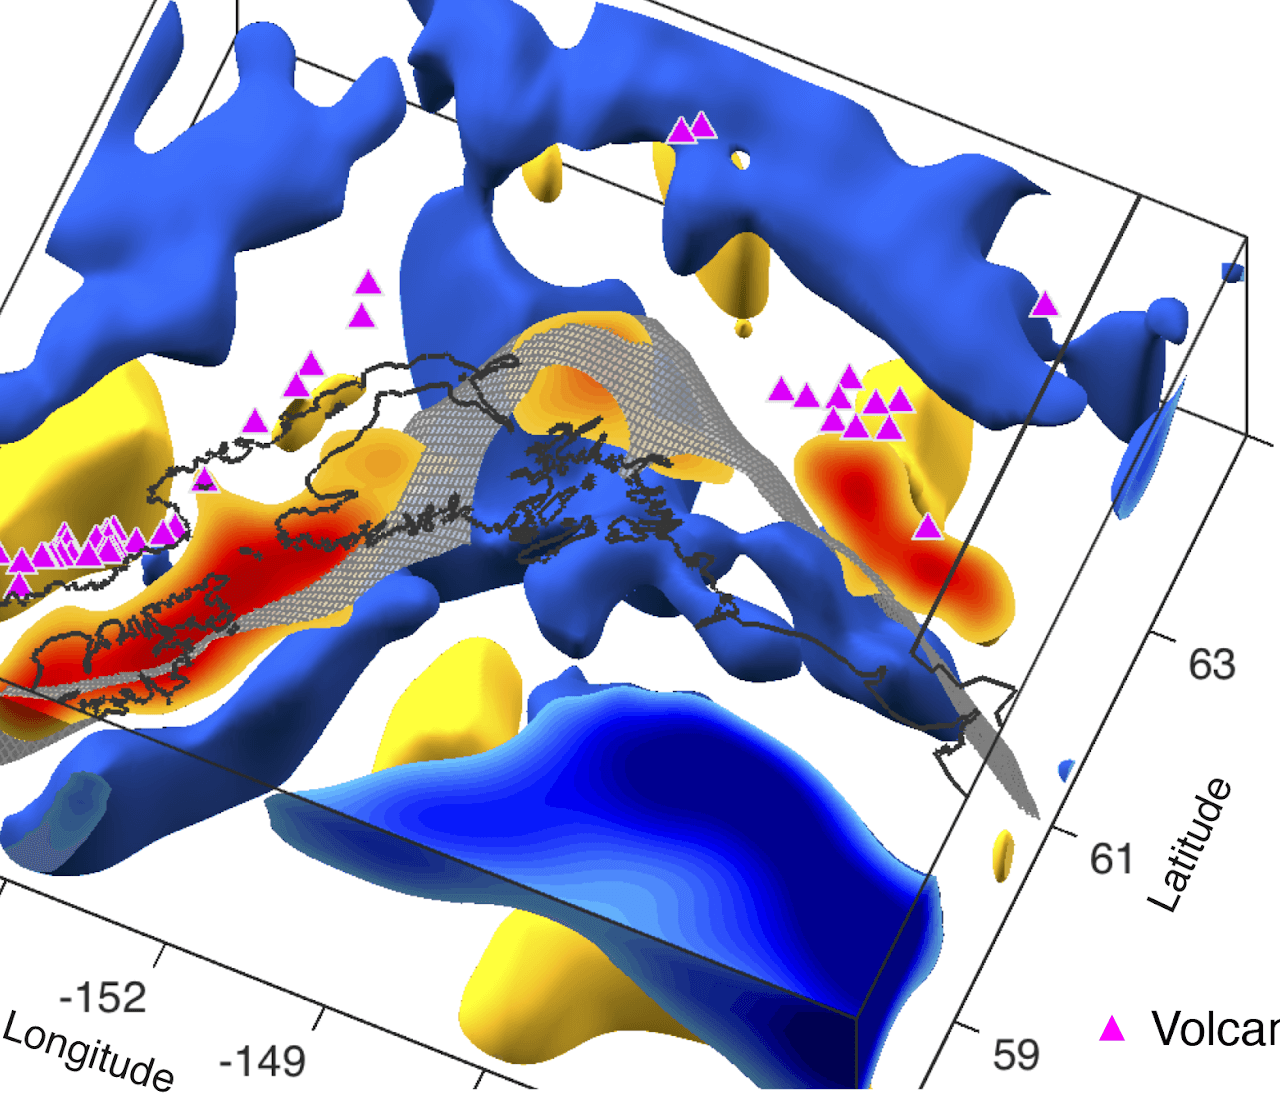 Segmentation of the Alaska subduction